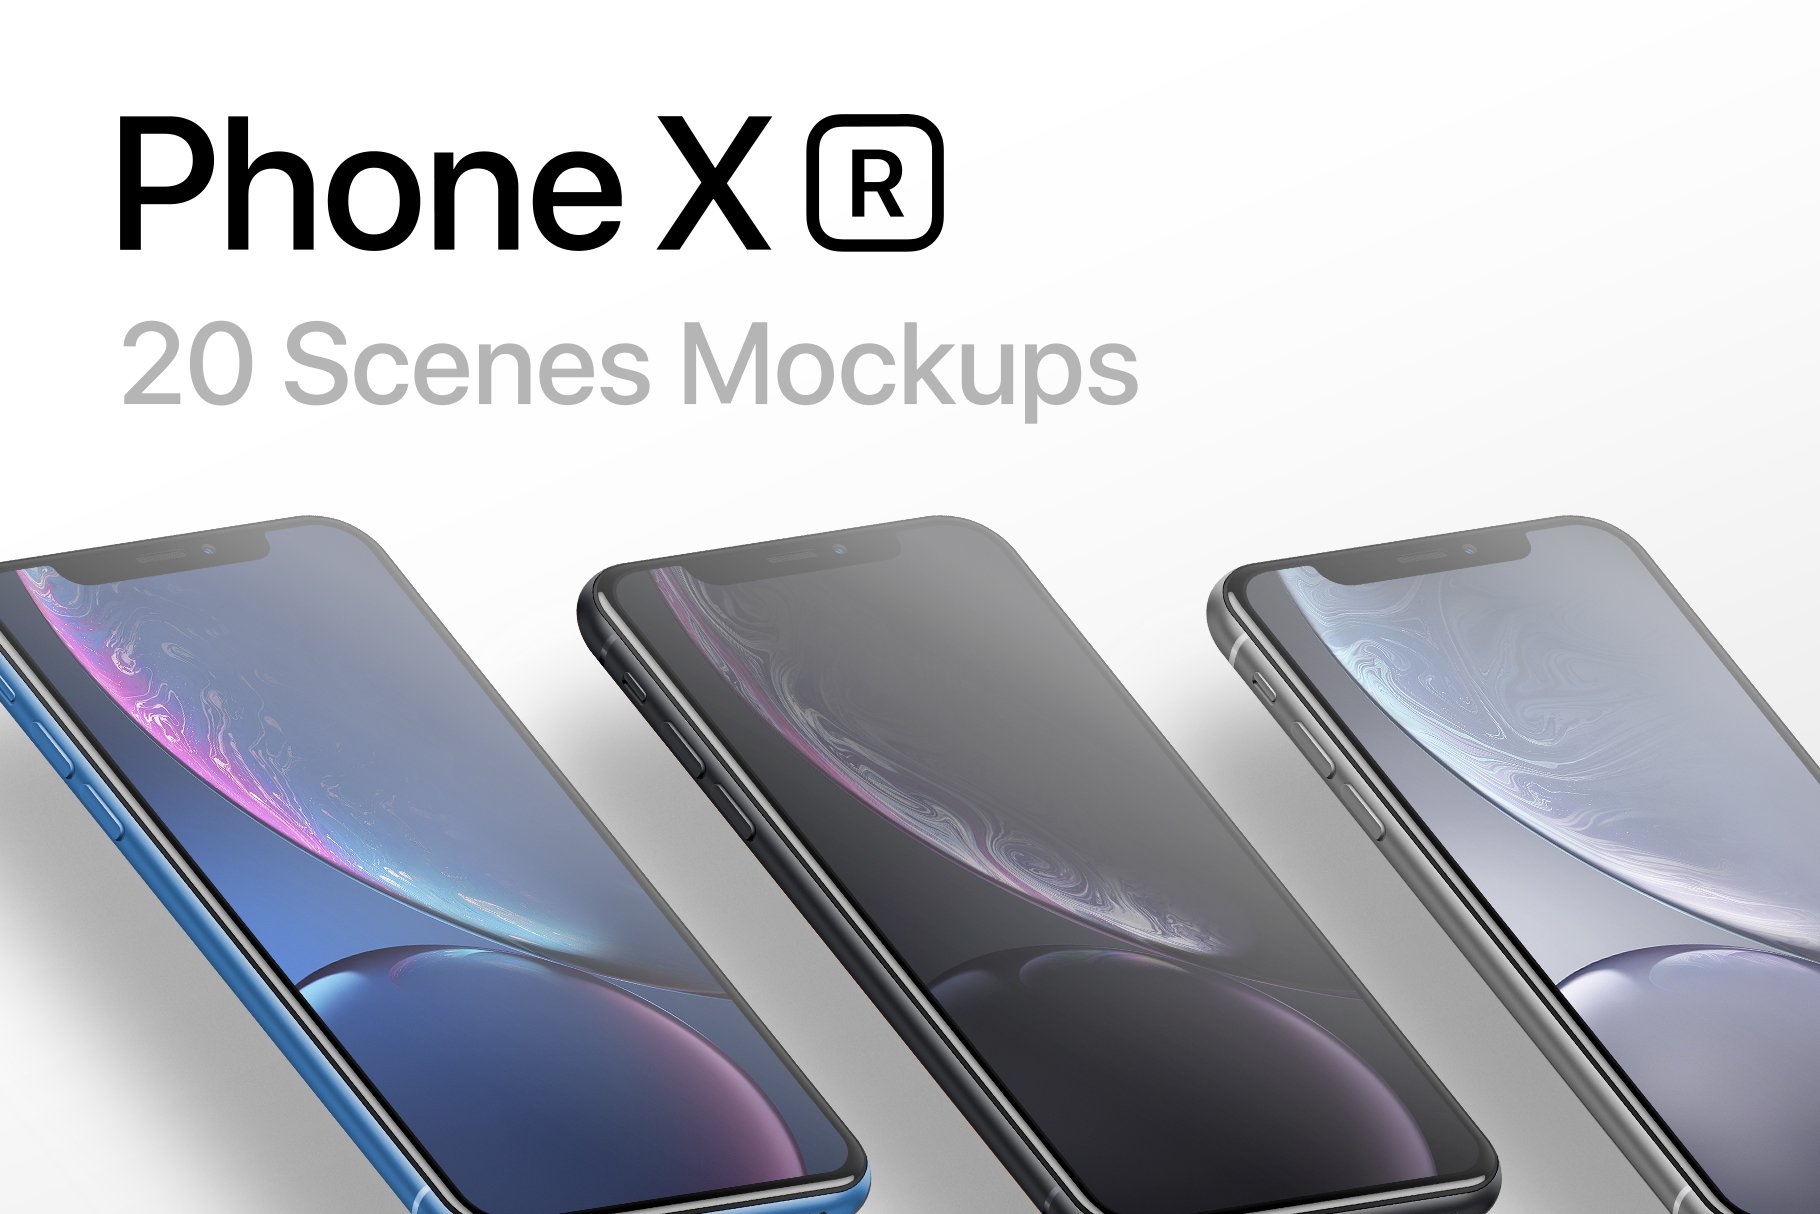 Phone XR 20 Mockups Scenes 5K - PSD cover image.